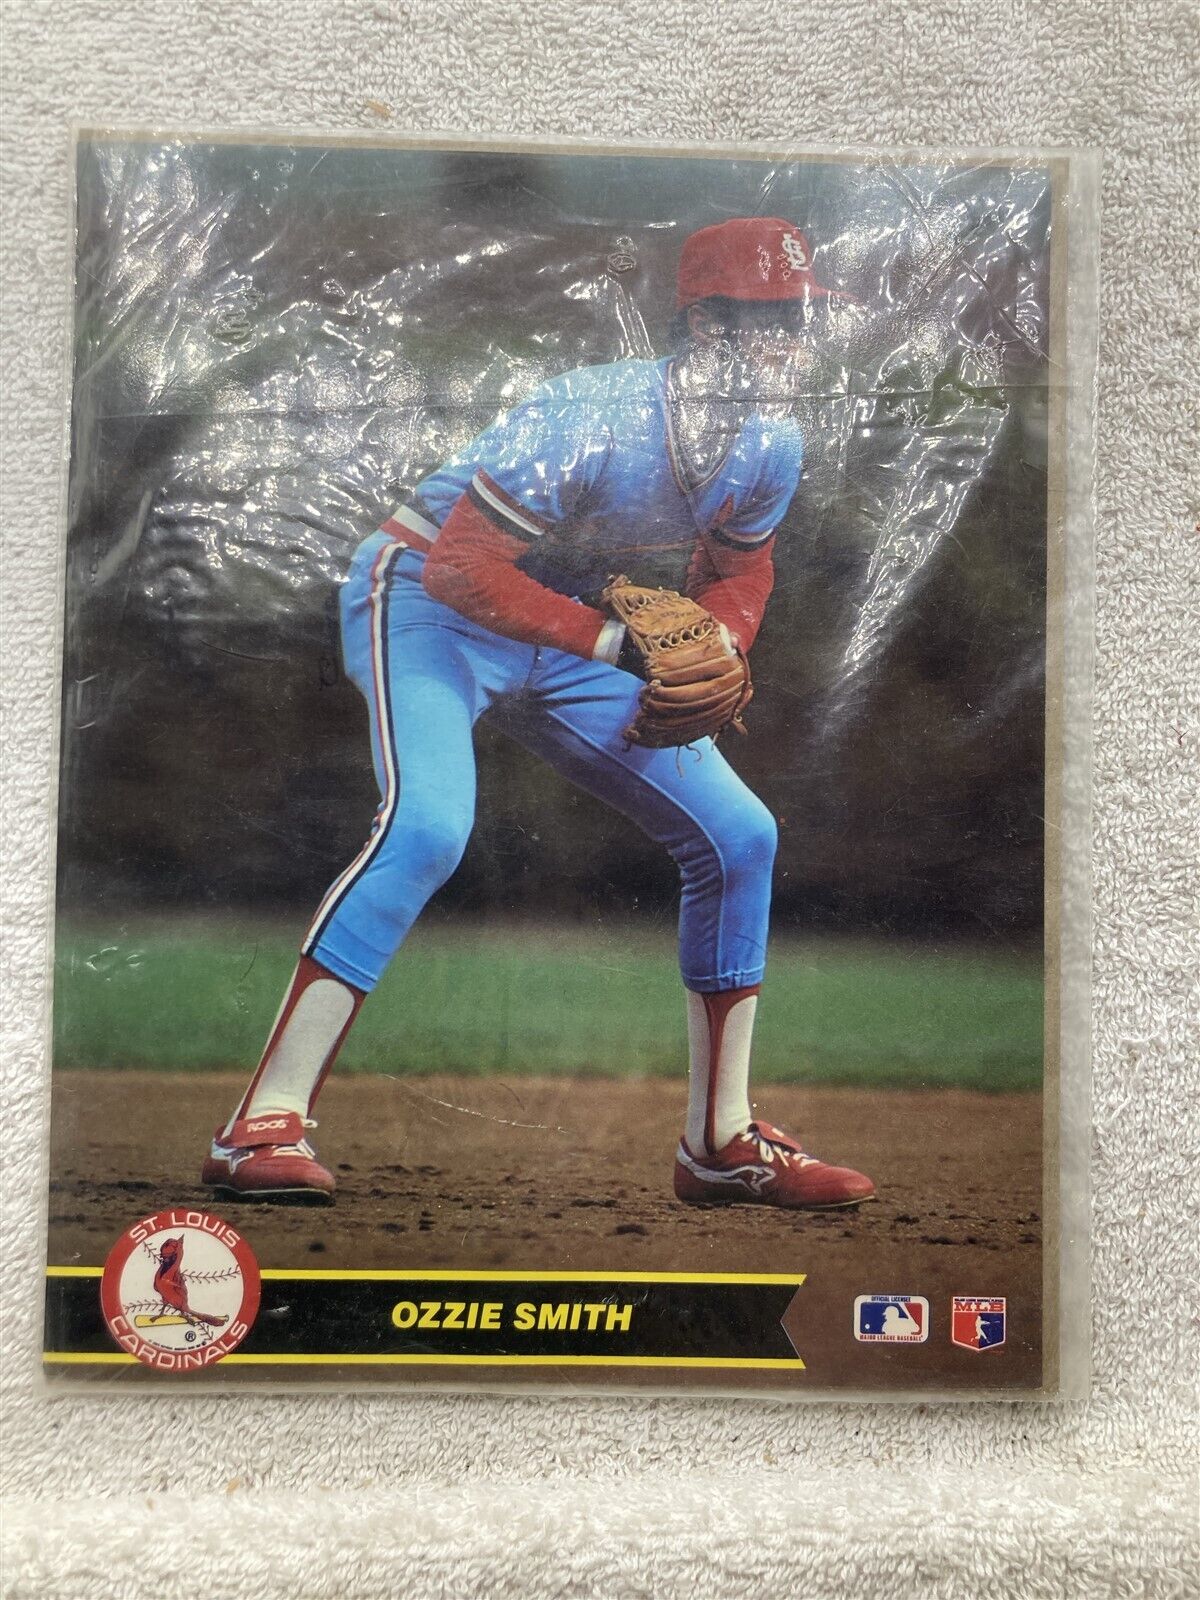 1990 Major League Baseball Action Photos Series 2 St Louis Cardinals Ozzie Smith